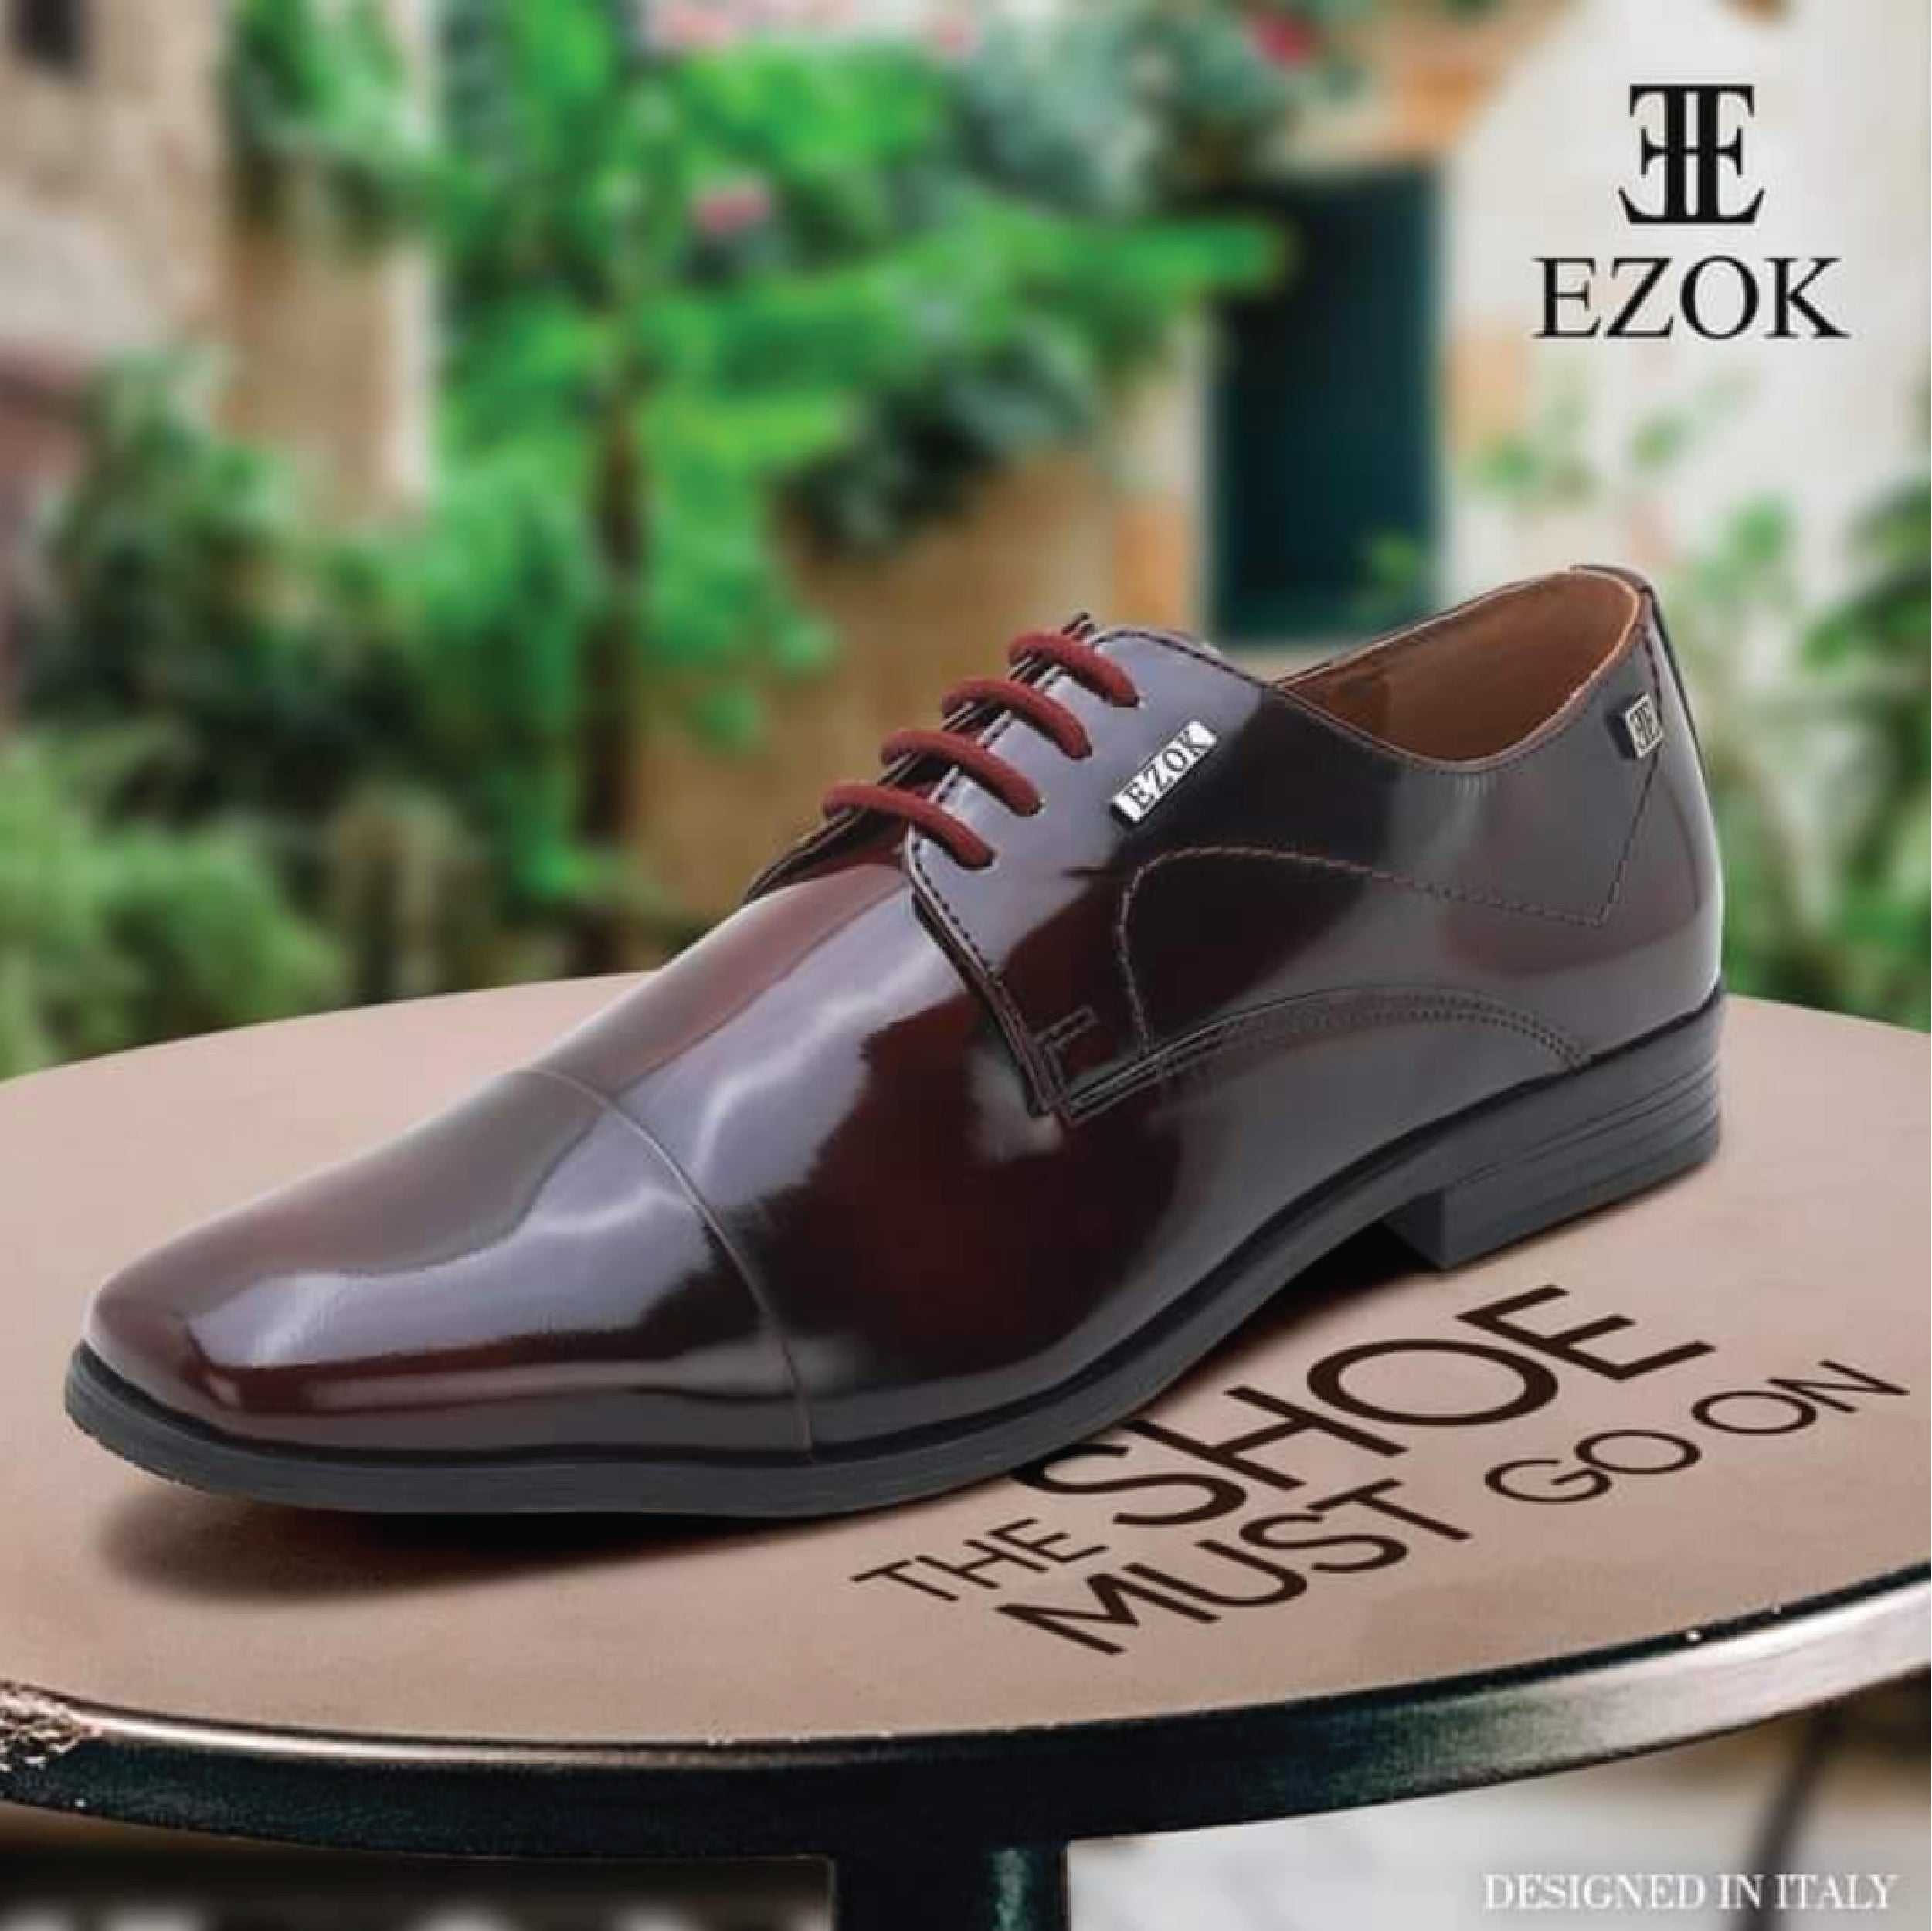 Ezok Brown Formal Cap Toe Leather Derby Shoes